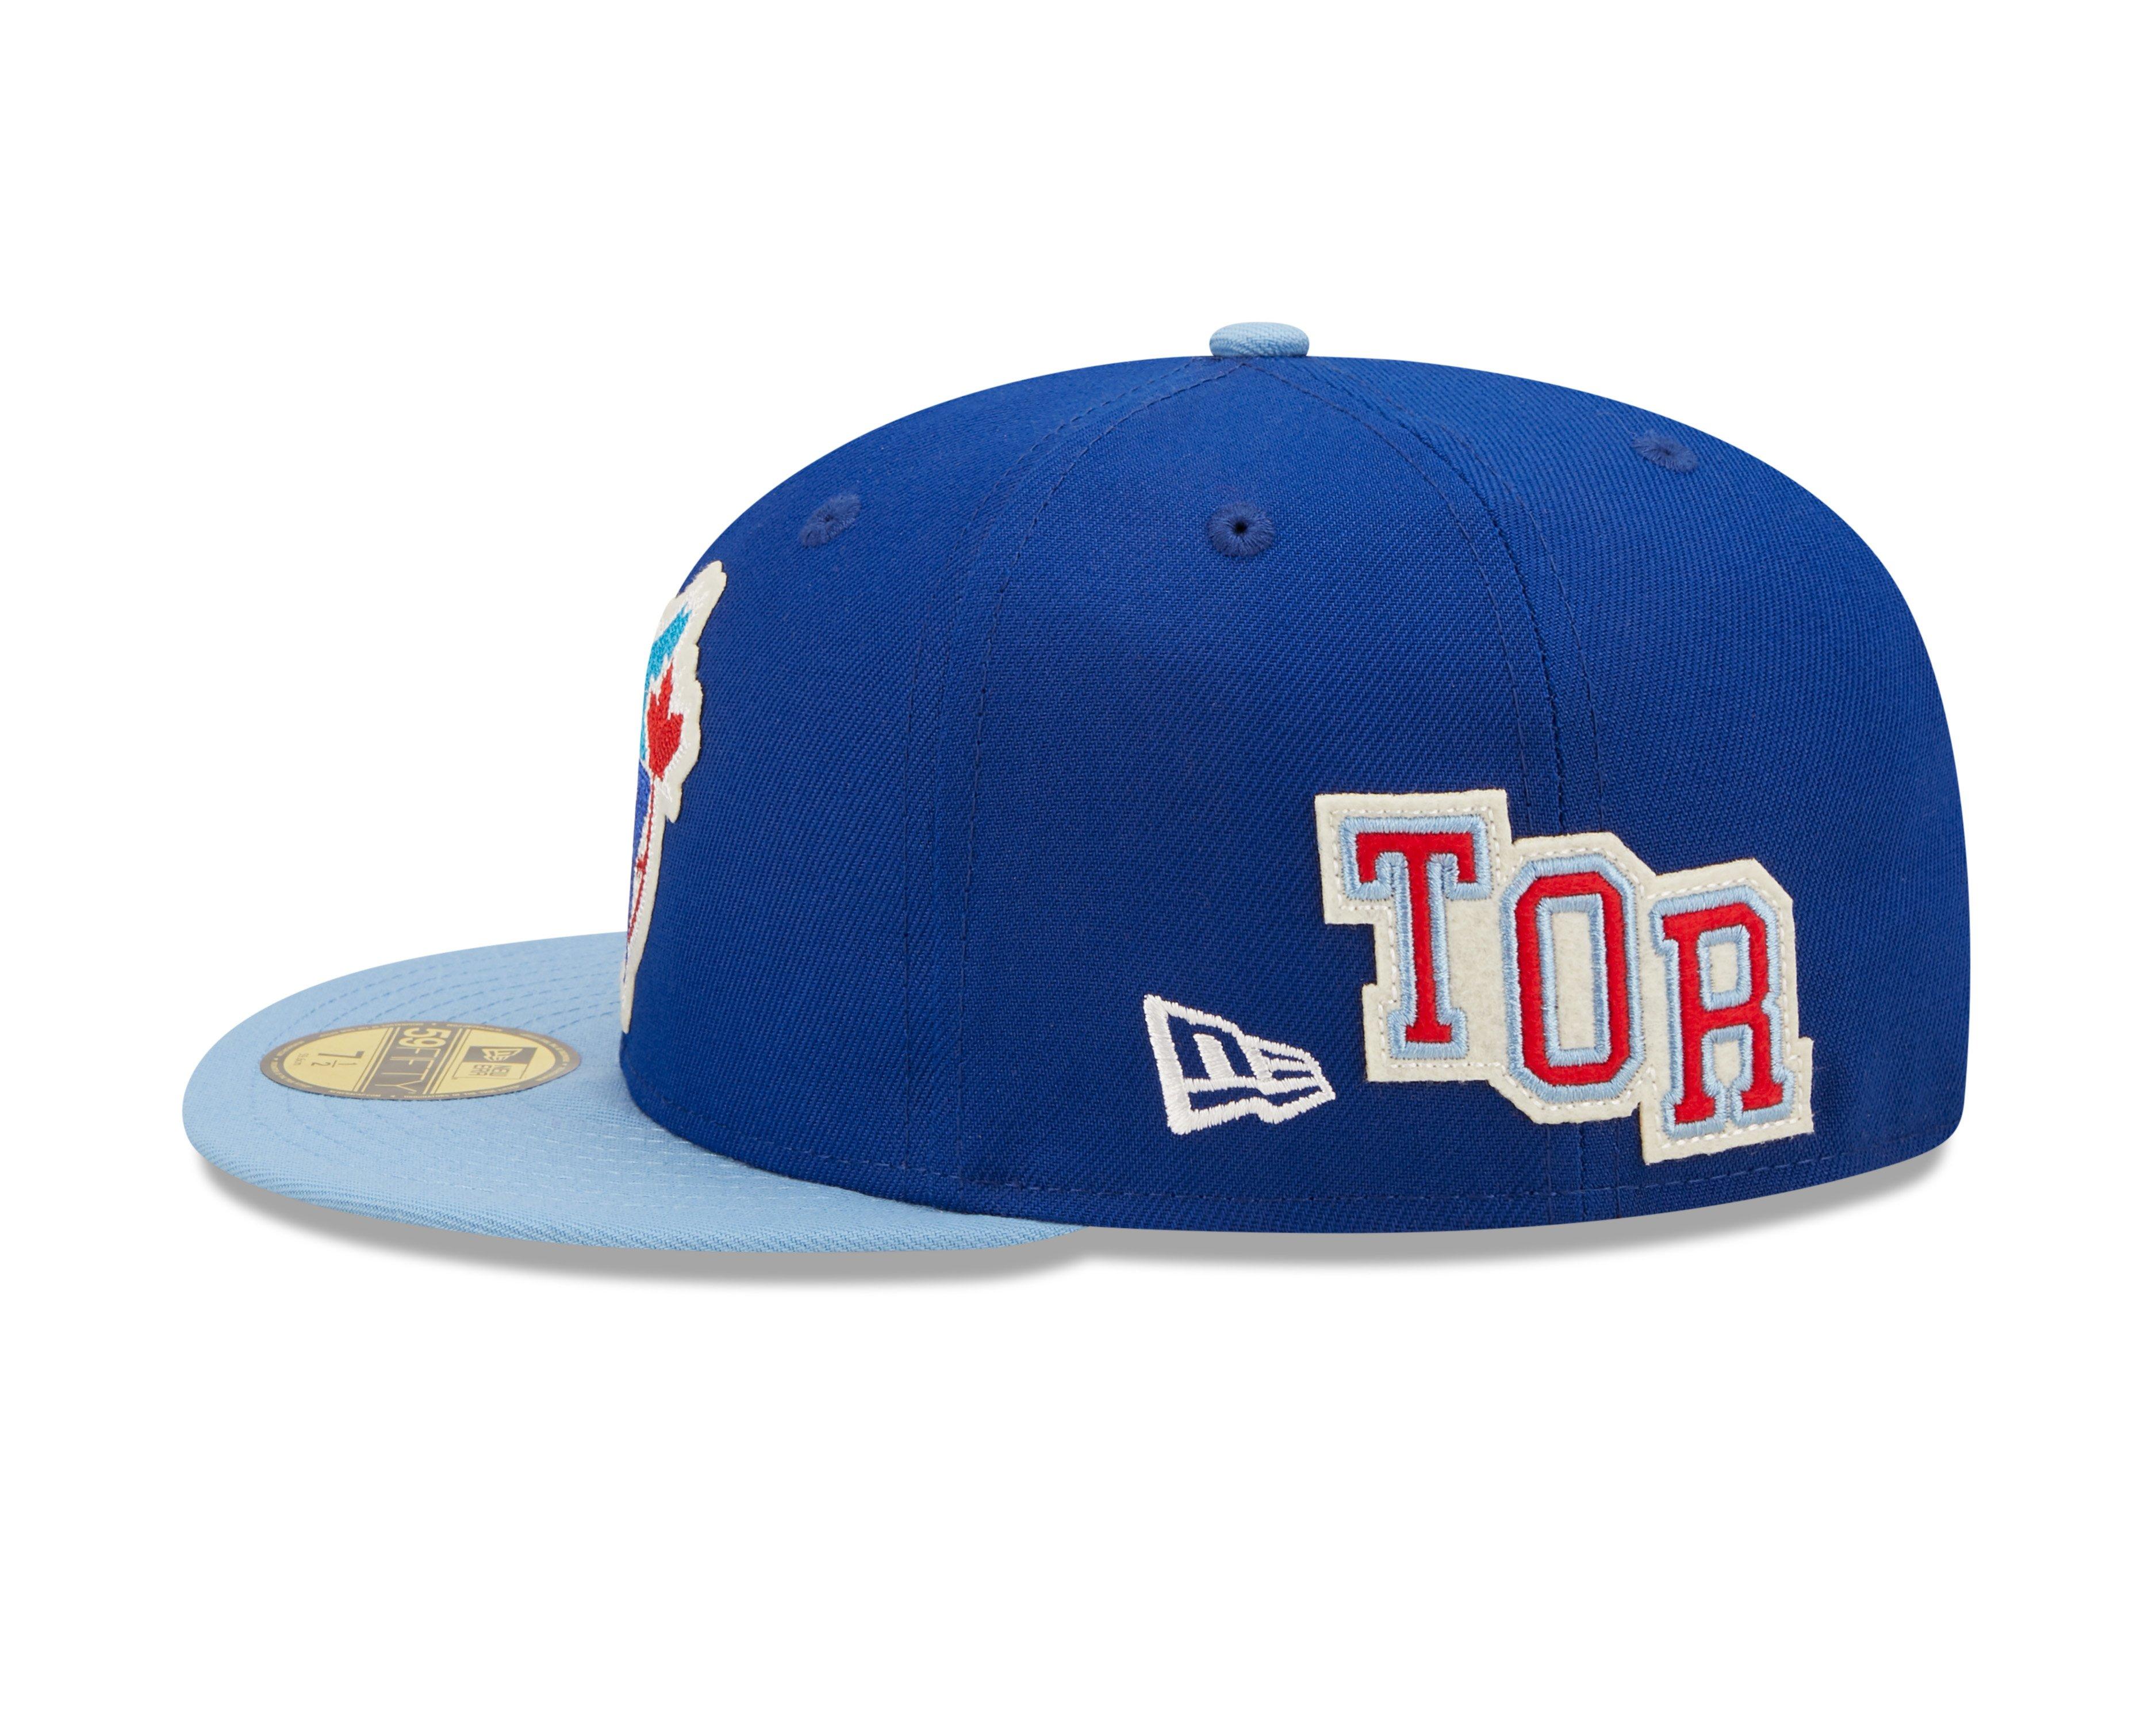 Kids Toronto Blue Jays Hat, Blue Jays Hats, Kids Baseball Cap